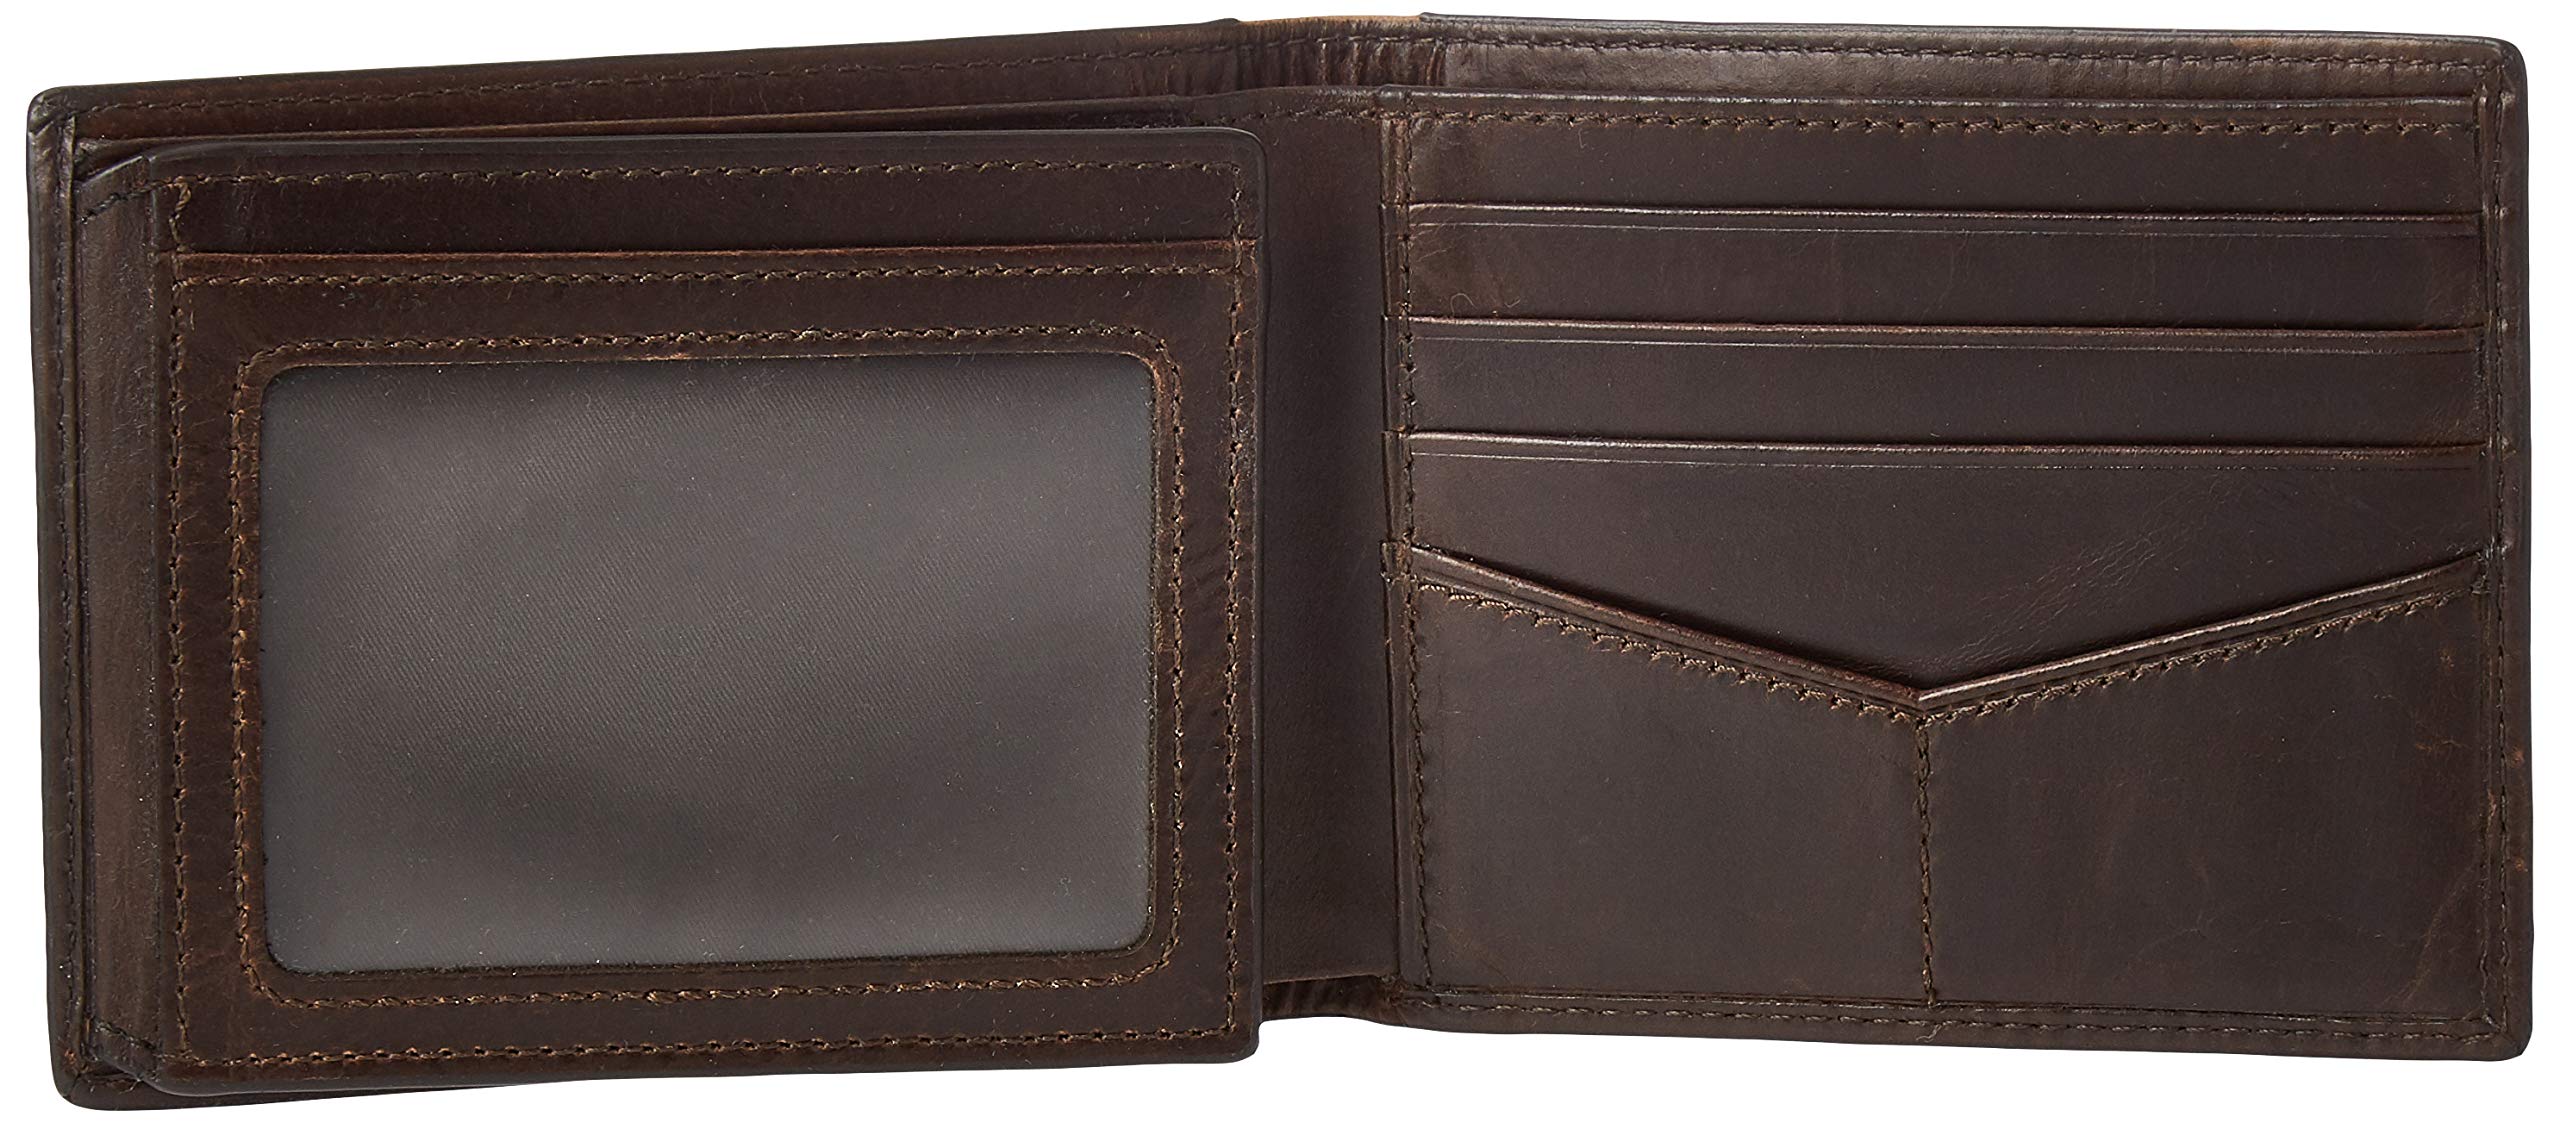 Fossil Men's Richard Leather RFID Blocking Bifold Flip ID Wallet